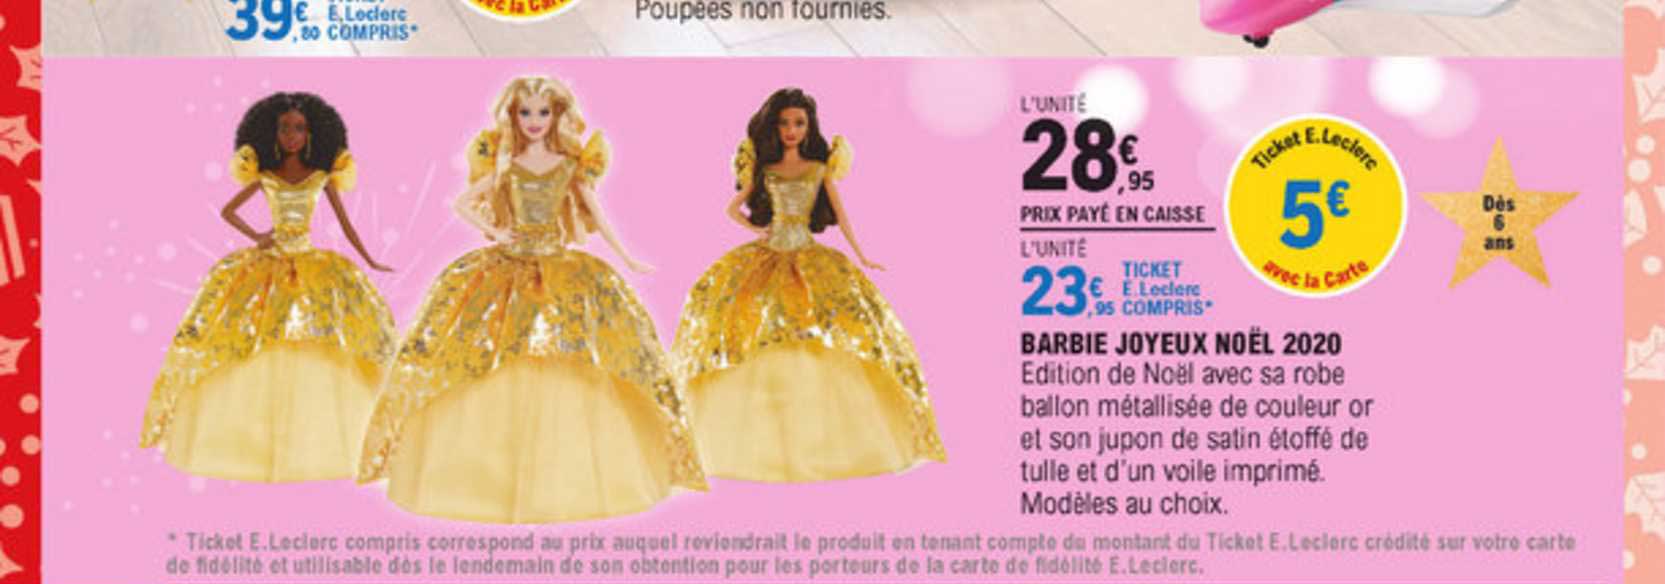 Barbie De Noel Carrefour Sirpizzaky Com